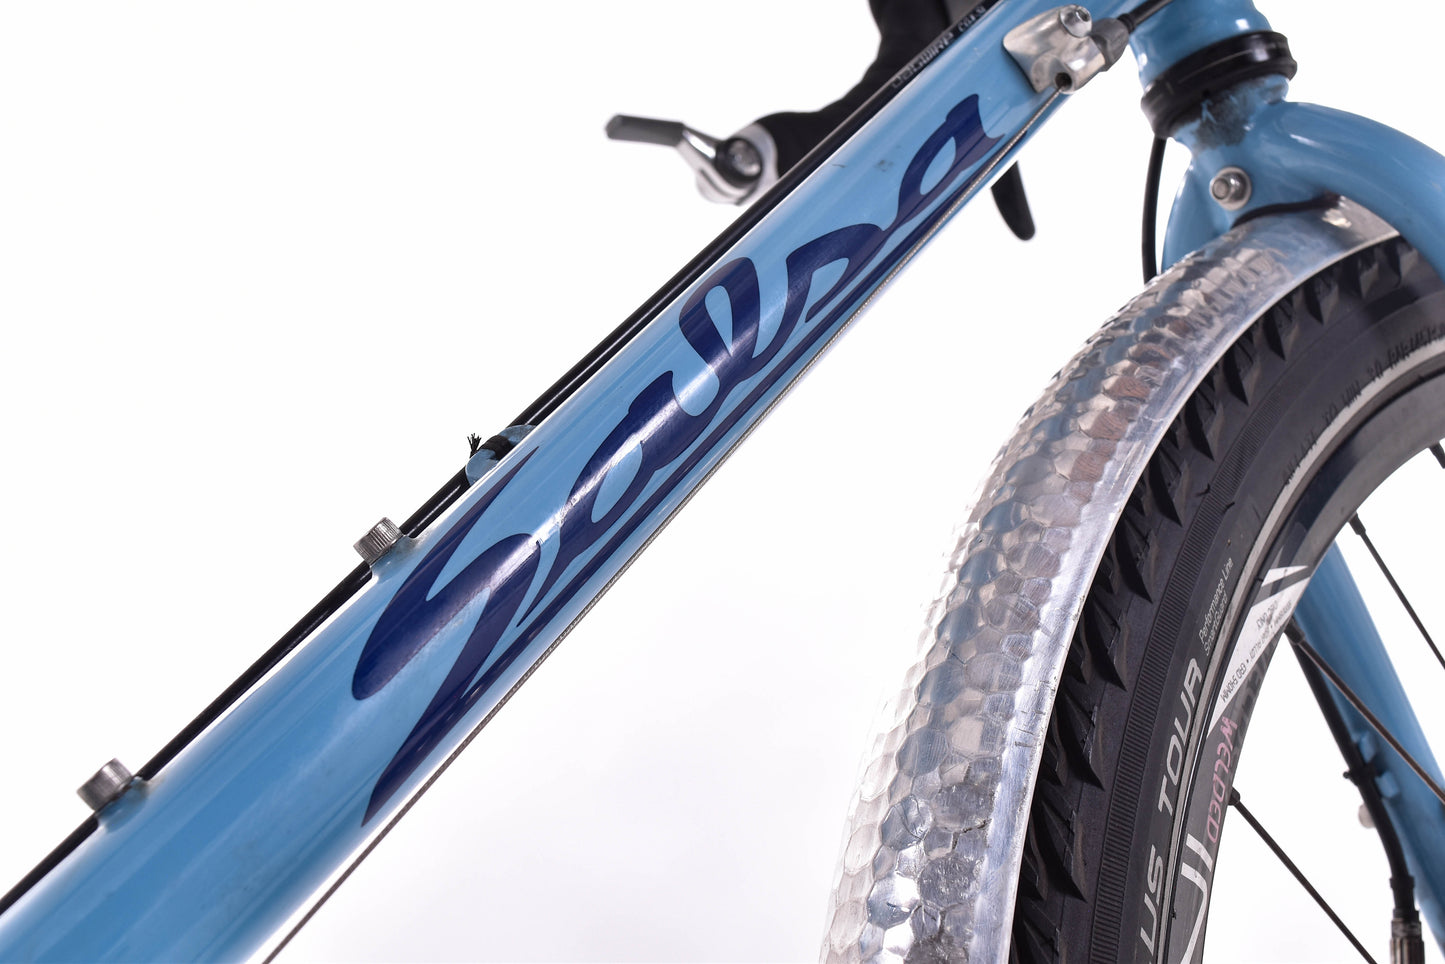 USED Salsa Vaya Steel Touring Bike 52cm Blue 26" Wheels